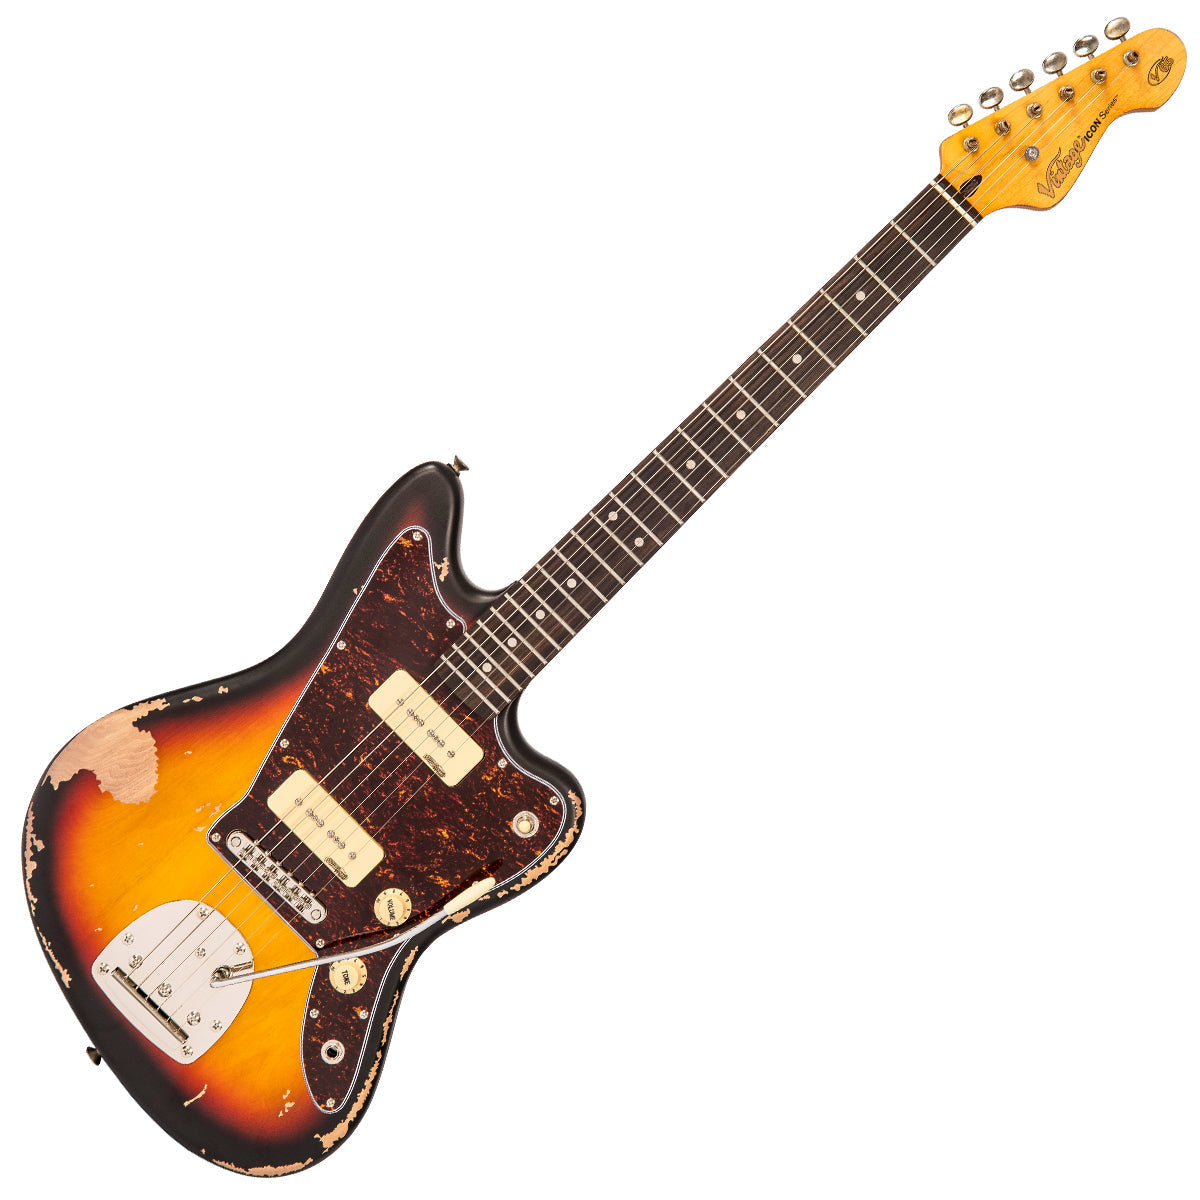 Vintage V65 ICON Vibrato Electric Guitar ~ Distressed Tobacco Sunburst, Electric Guitar for sale at Richards Guitars.